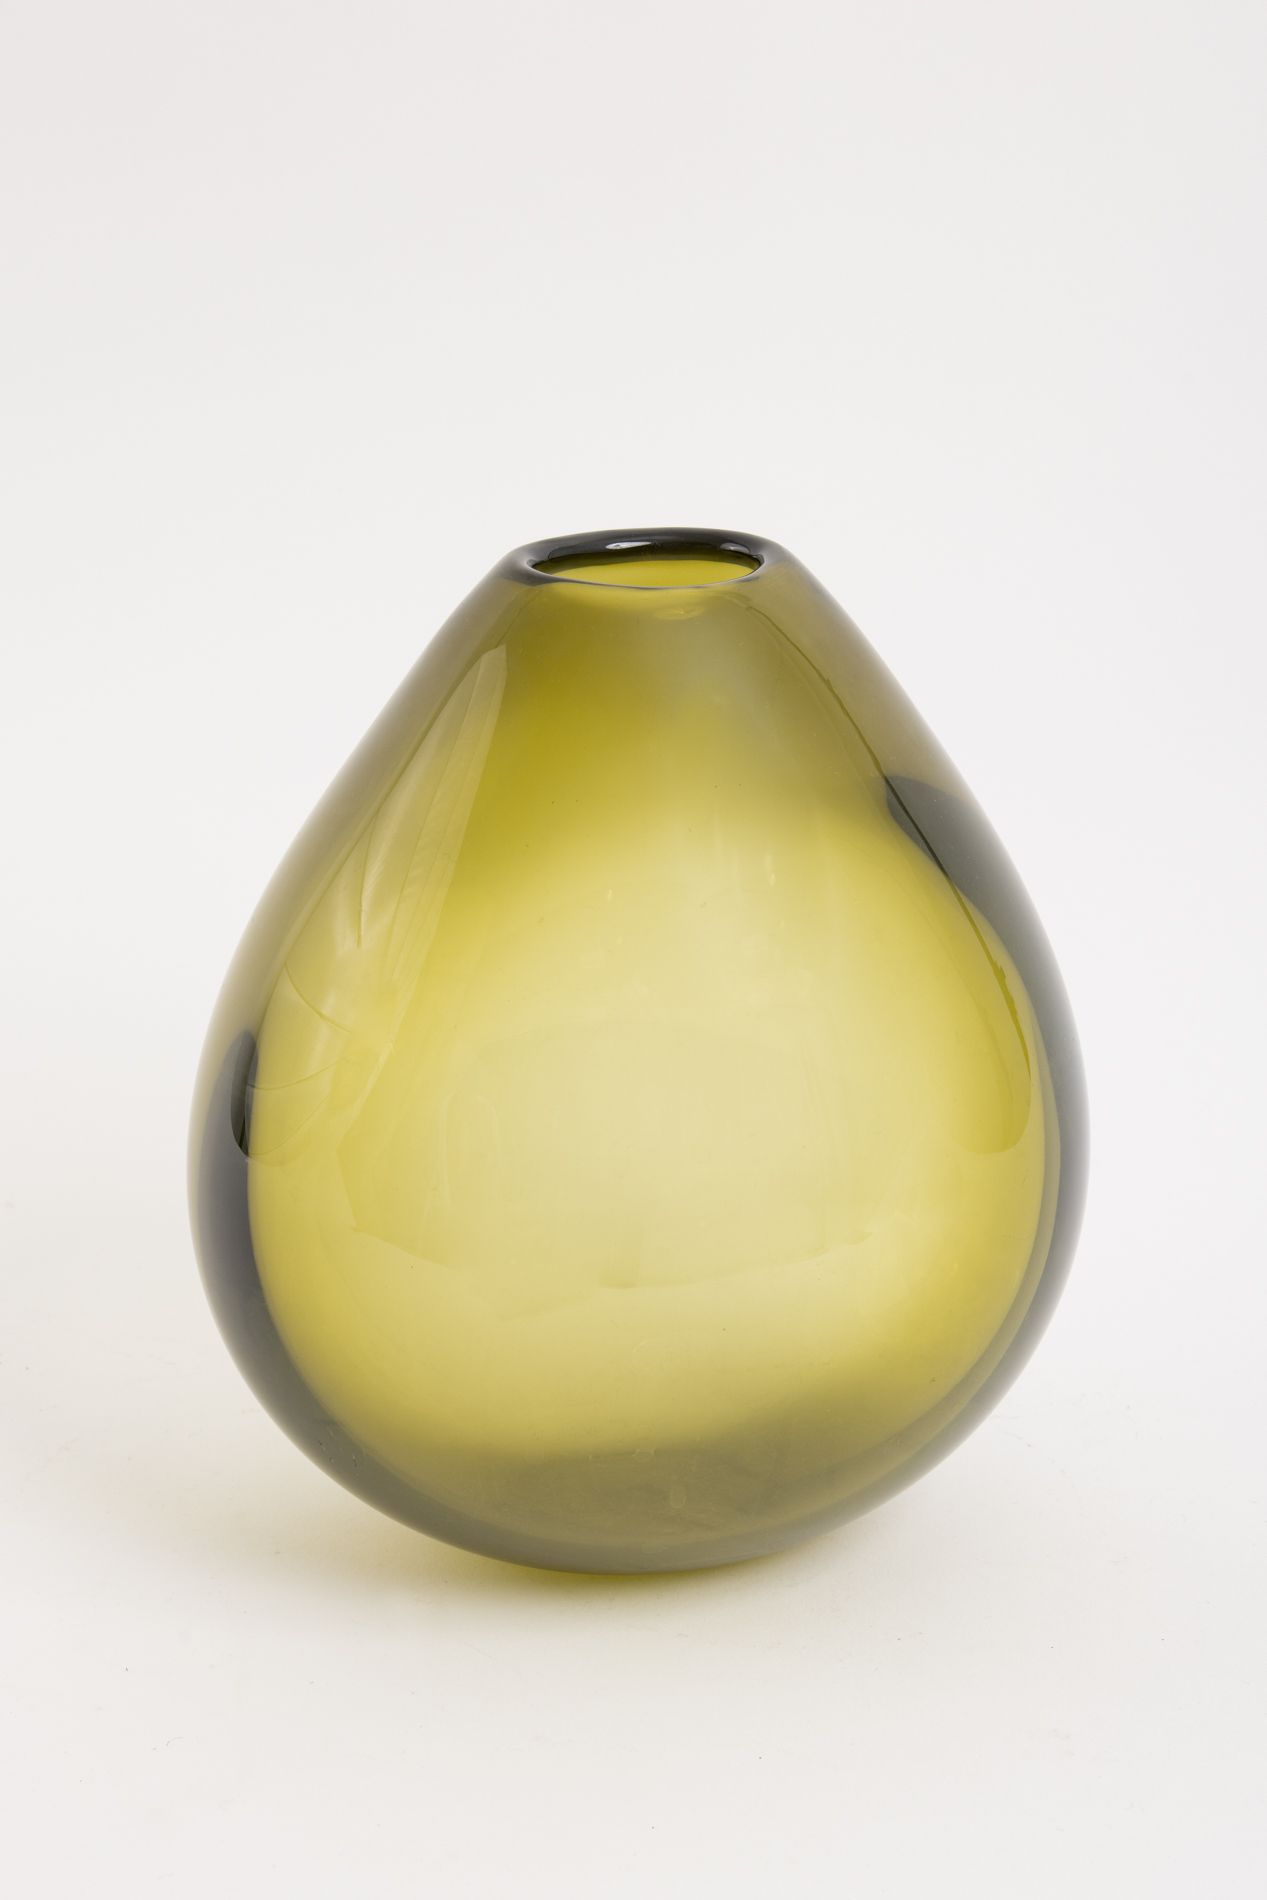 Null Per LUTKEN (1916-1998), HOLMEGAARD Dinamarca
Jarrón ovoide de vidrio amaril&hellip;